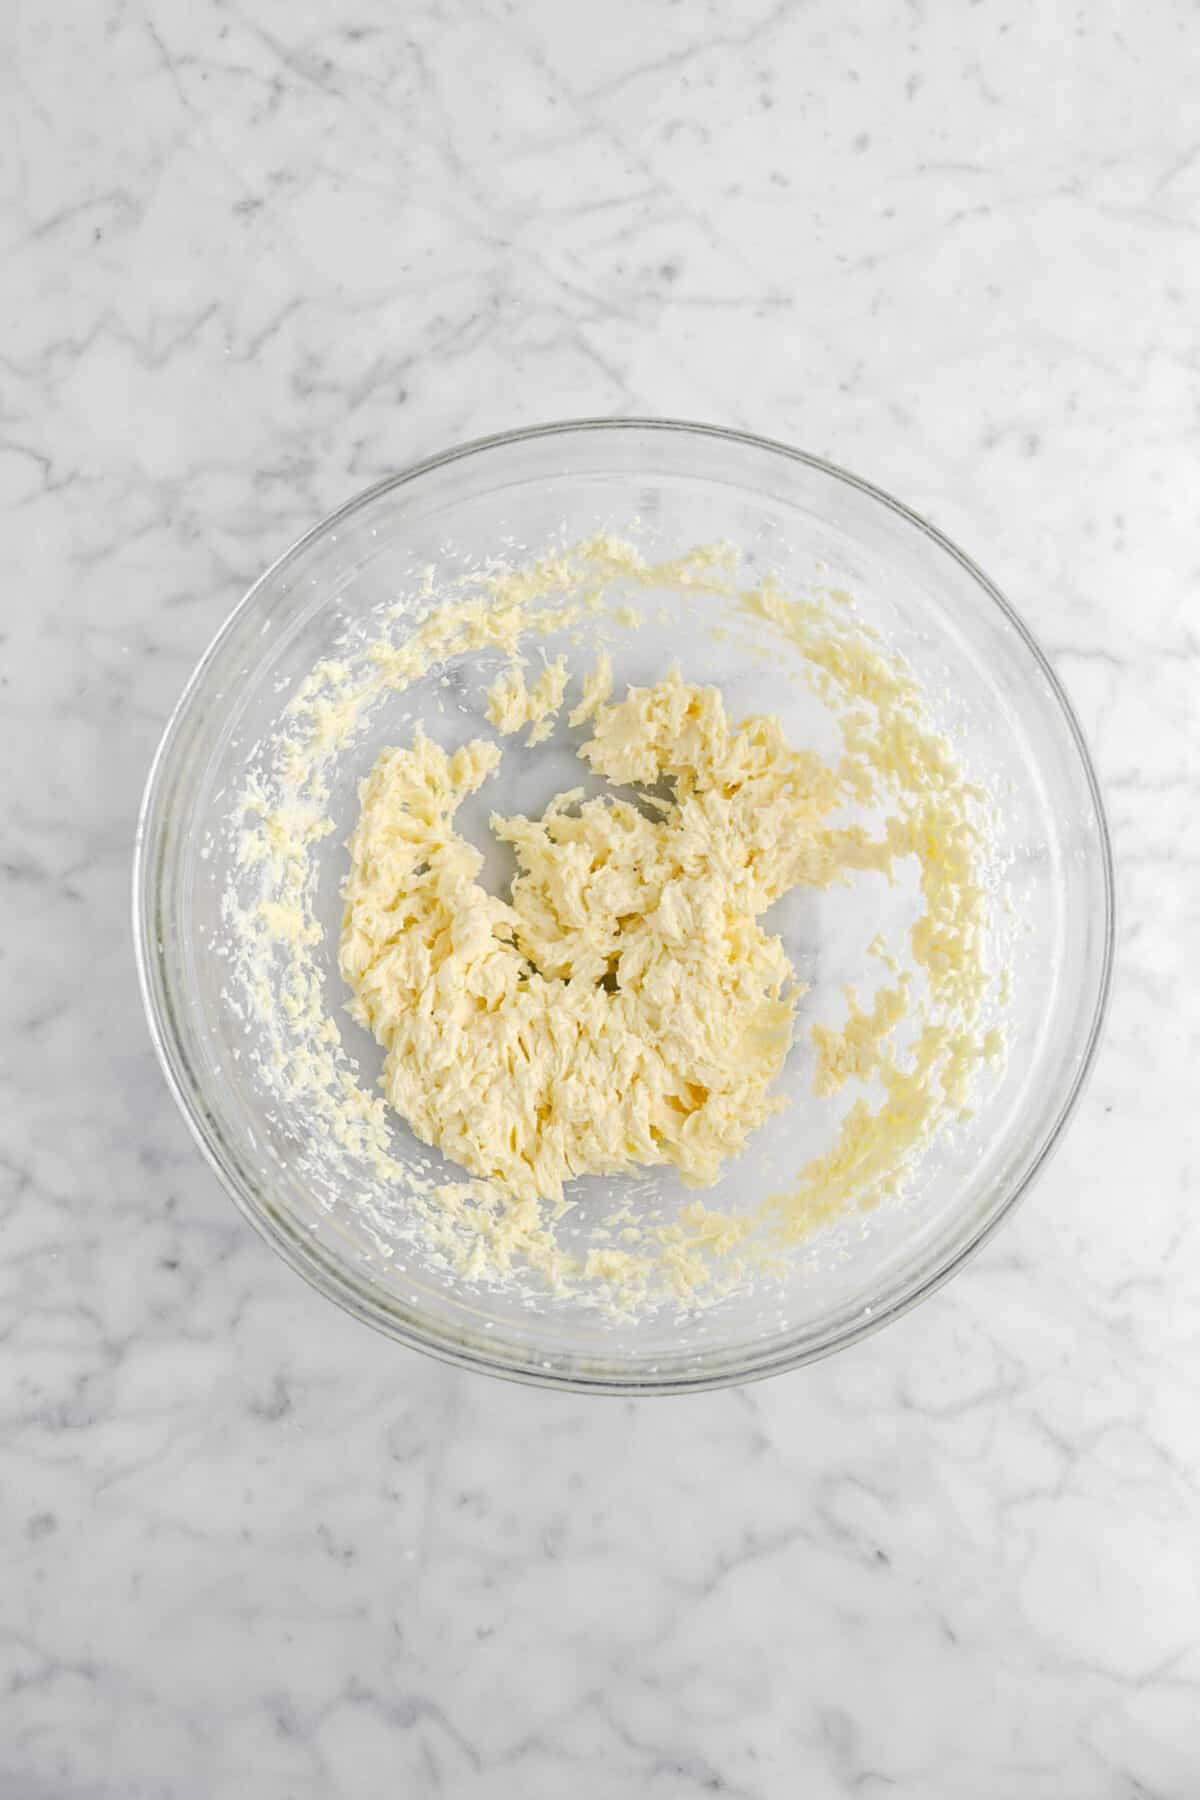 liquid ingredients mixed into butter mixture